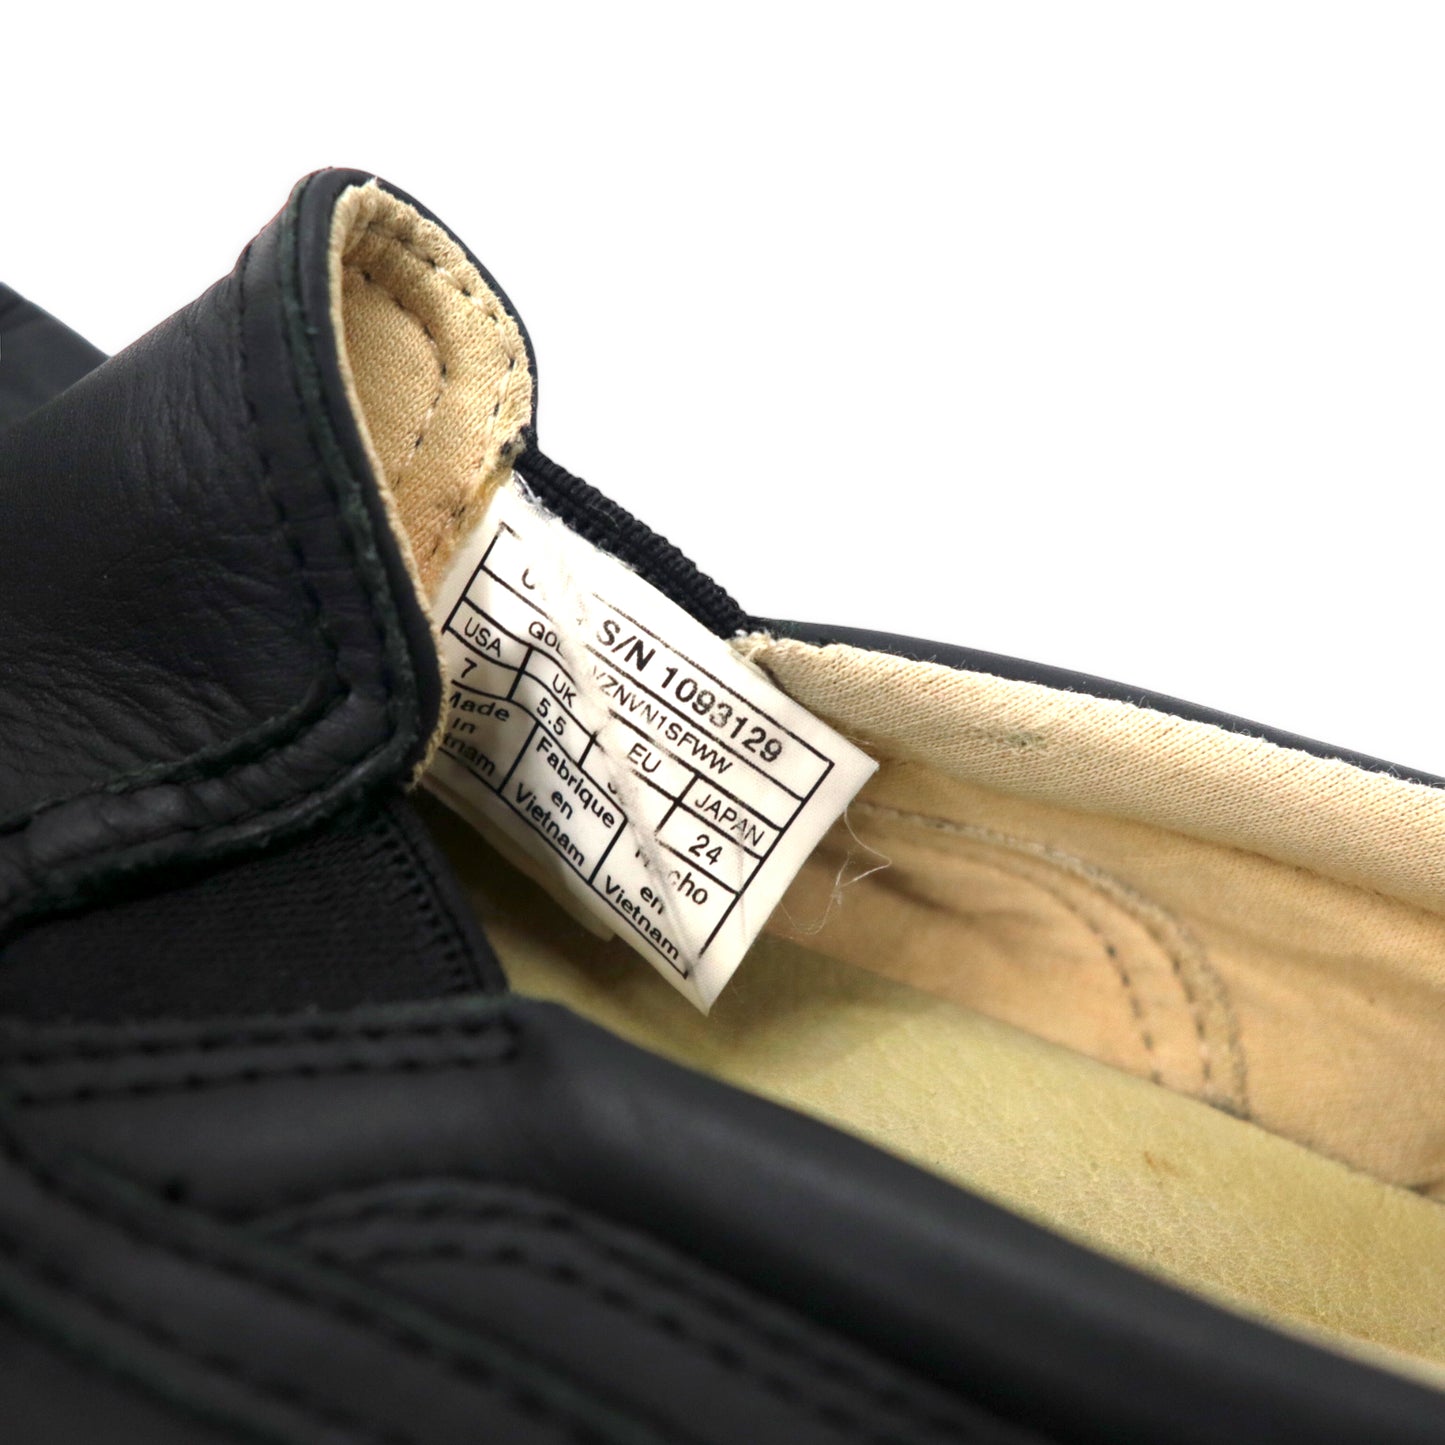 UGG レザー スリッポン スニーカー 24cm ブラック Fierce Black Leather Slip On Sneakers 1093129